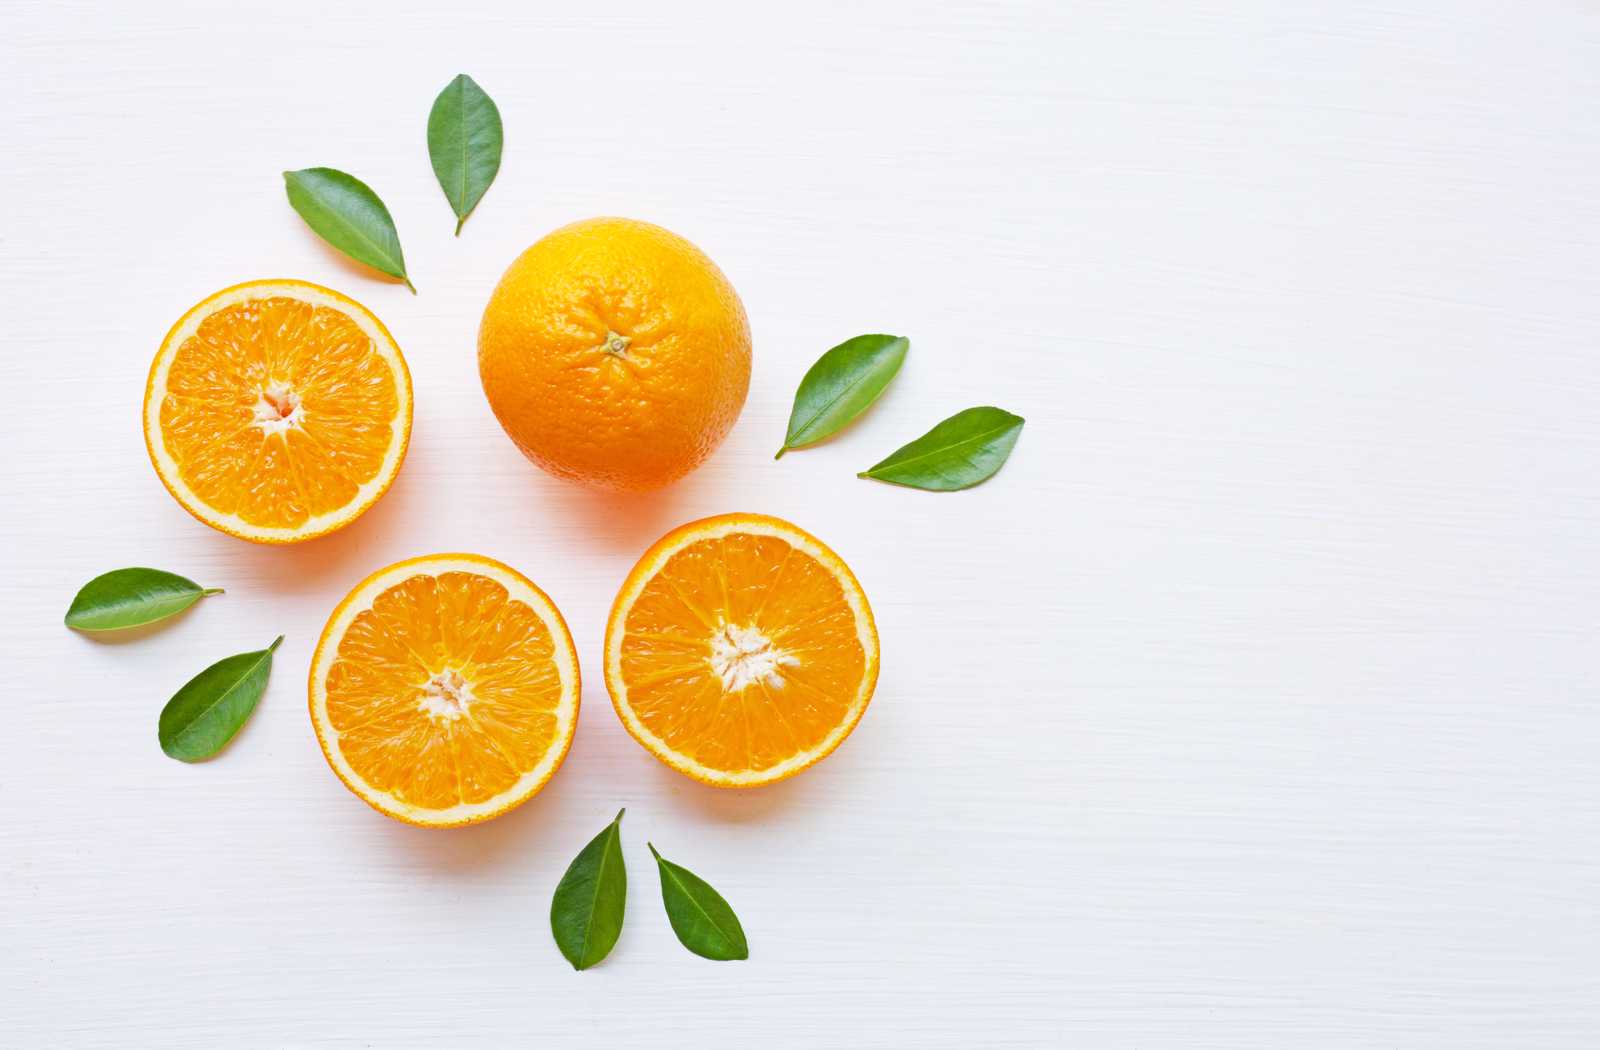 Orange halves sliced lying artfully on white background